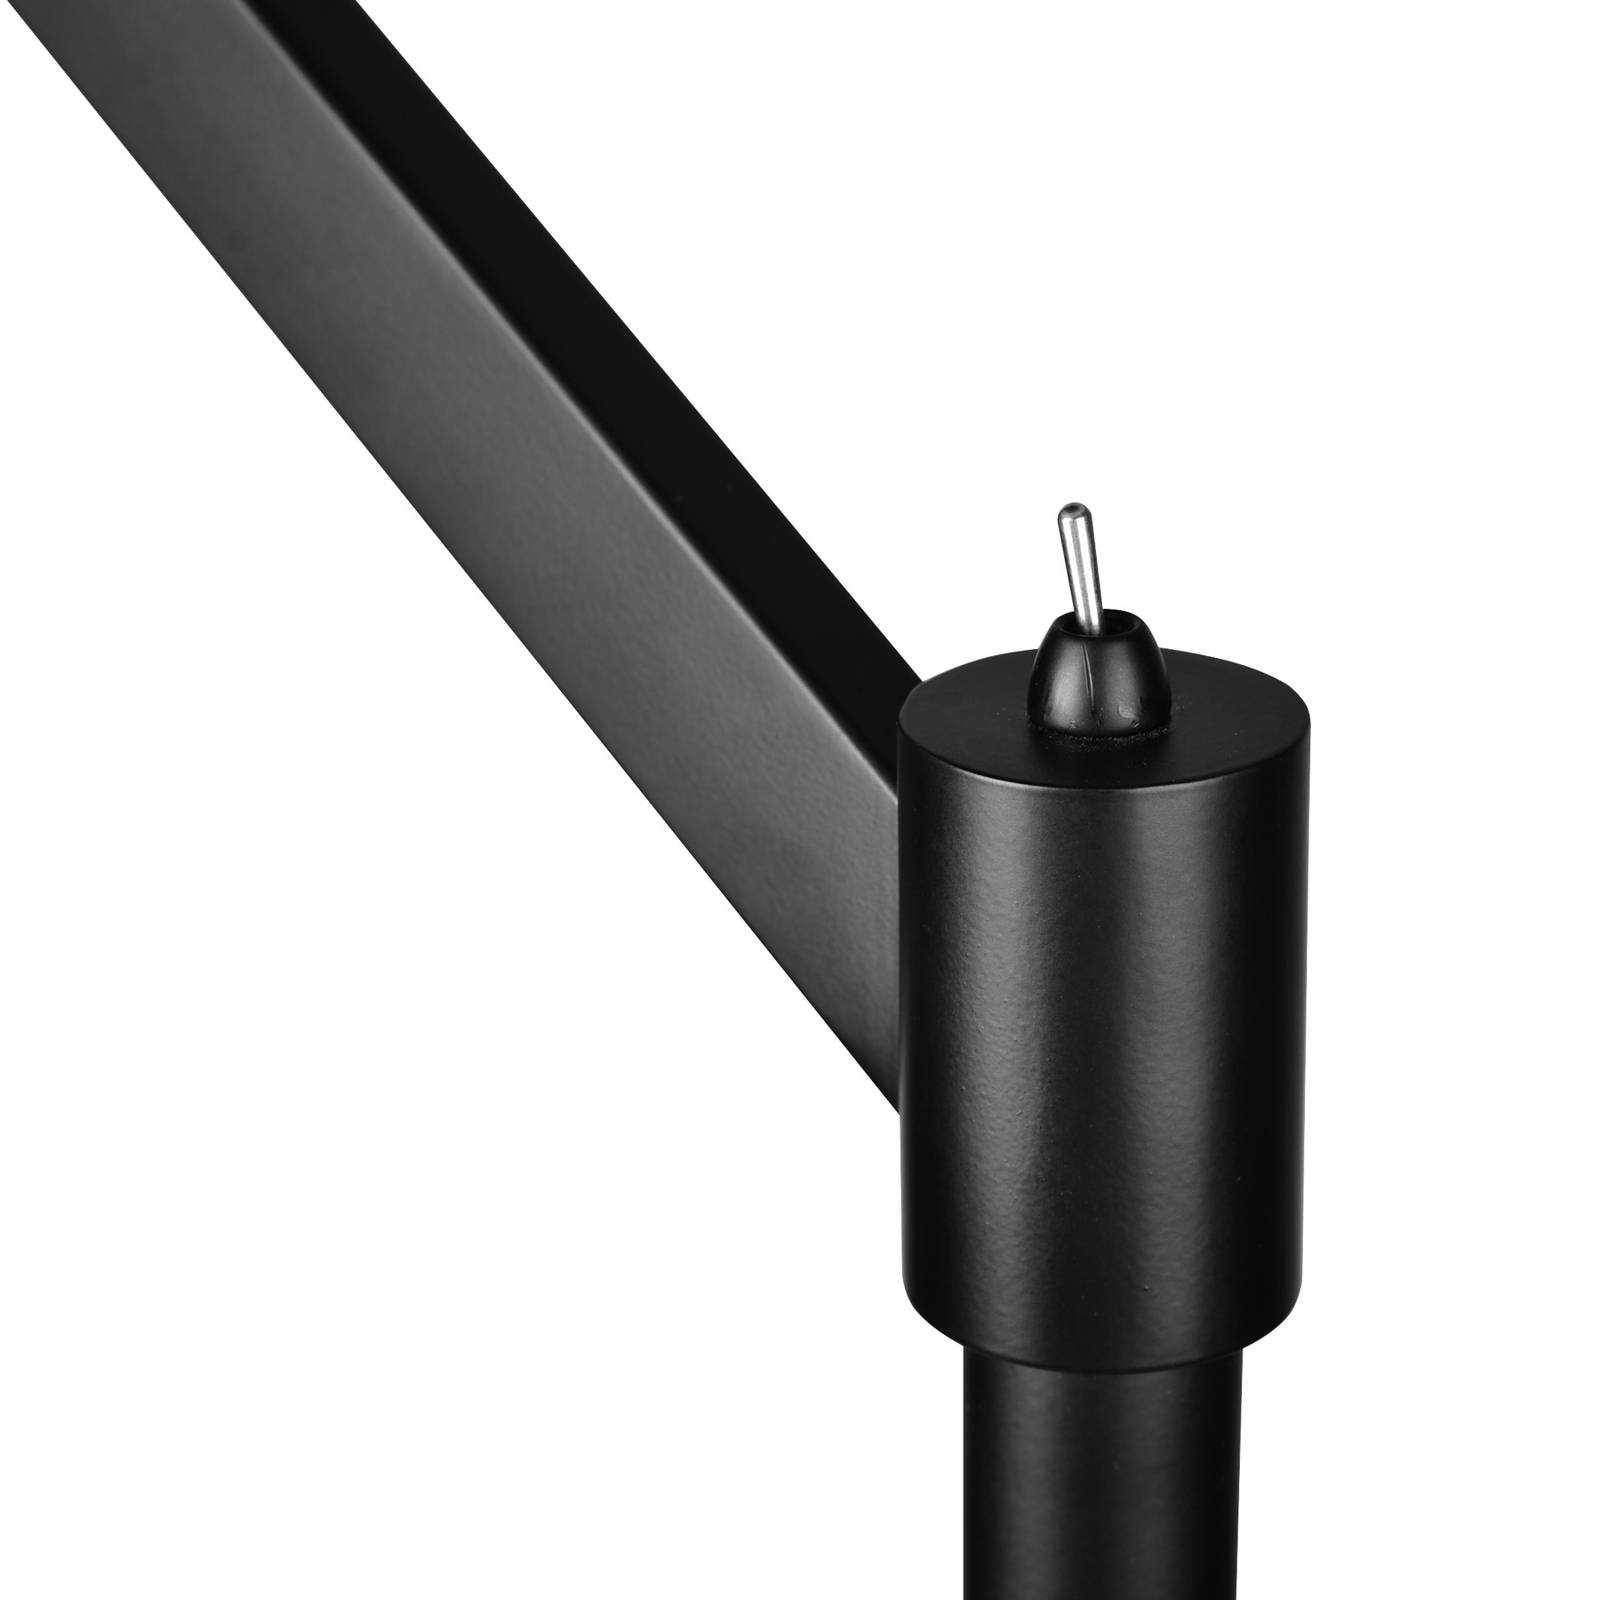 Trio lighting cassio állólámpa, fekete, szövet ernyővel